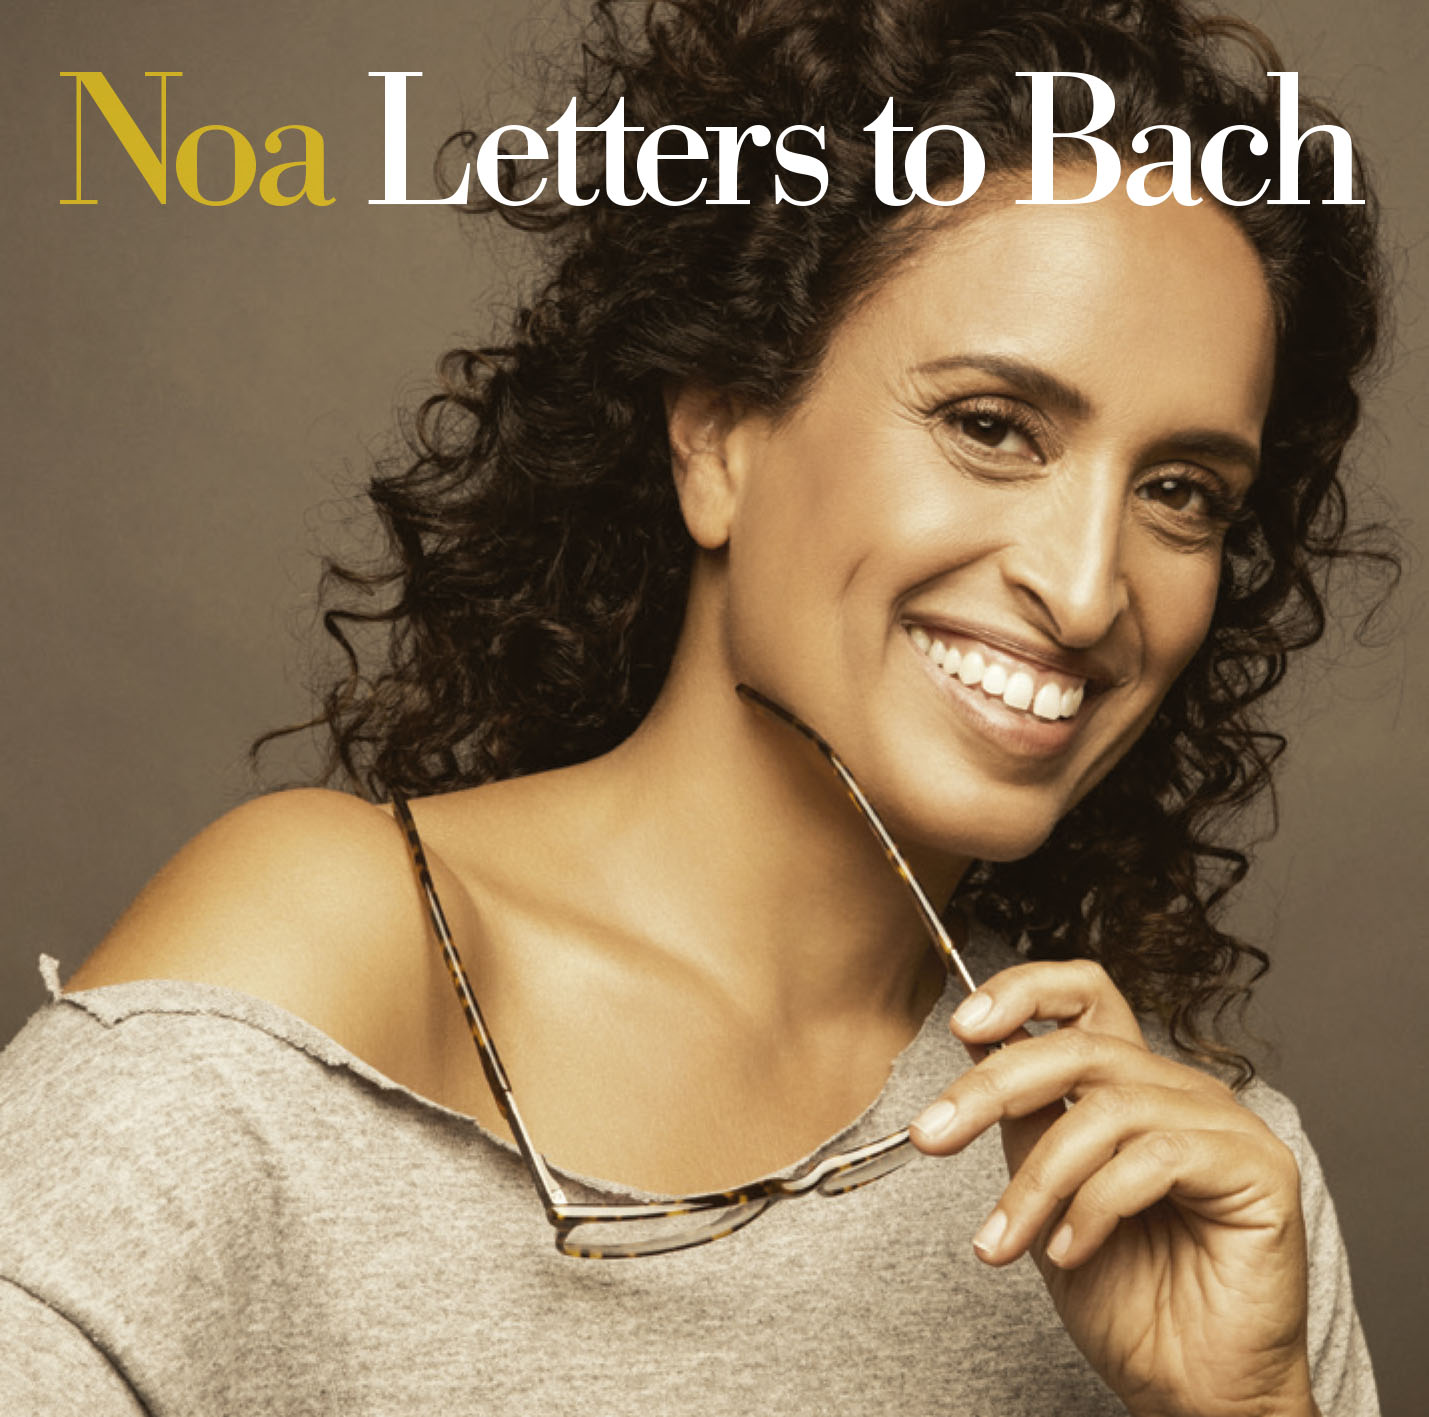 La cantante israelí Noa presenta Letters to Bach